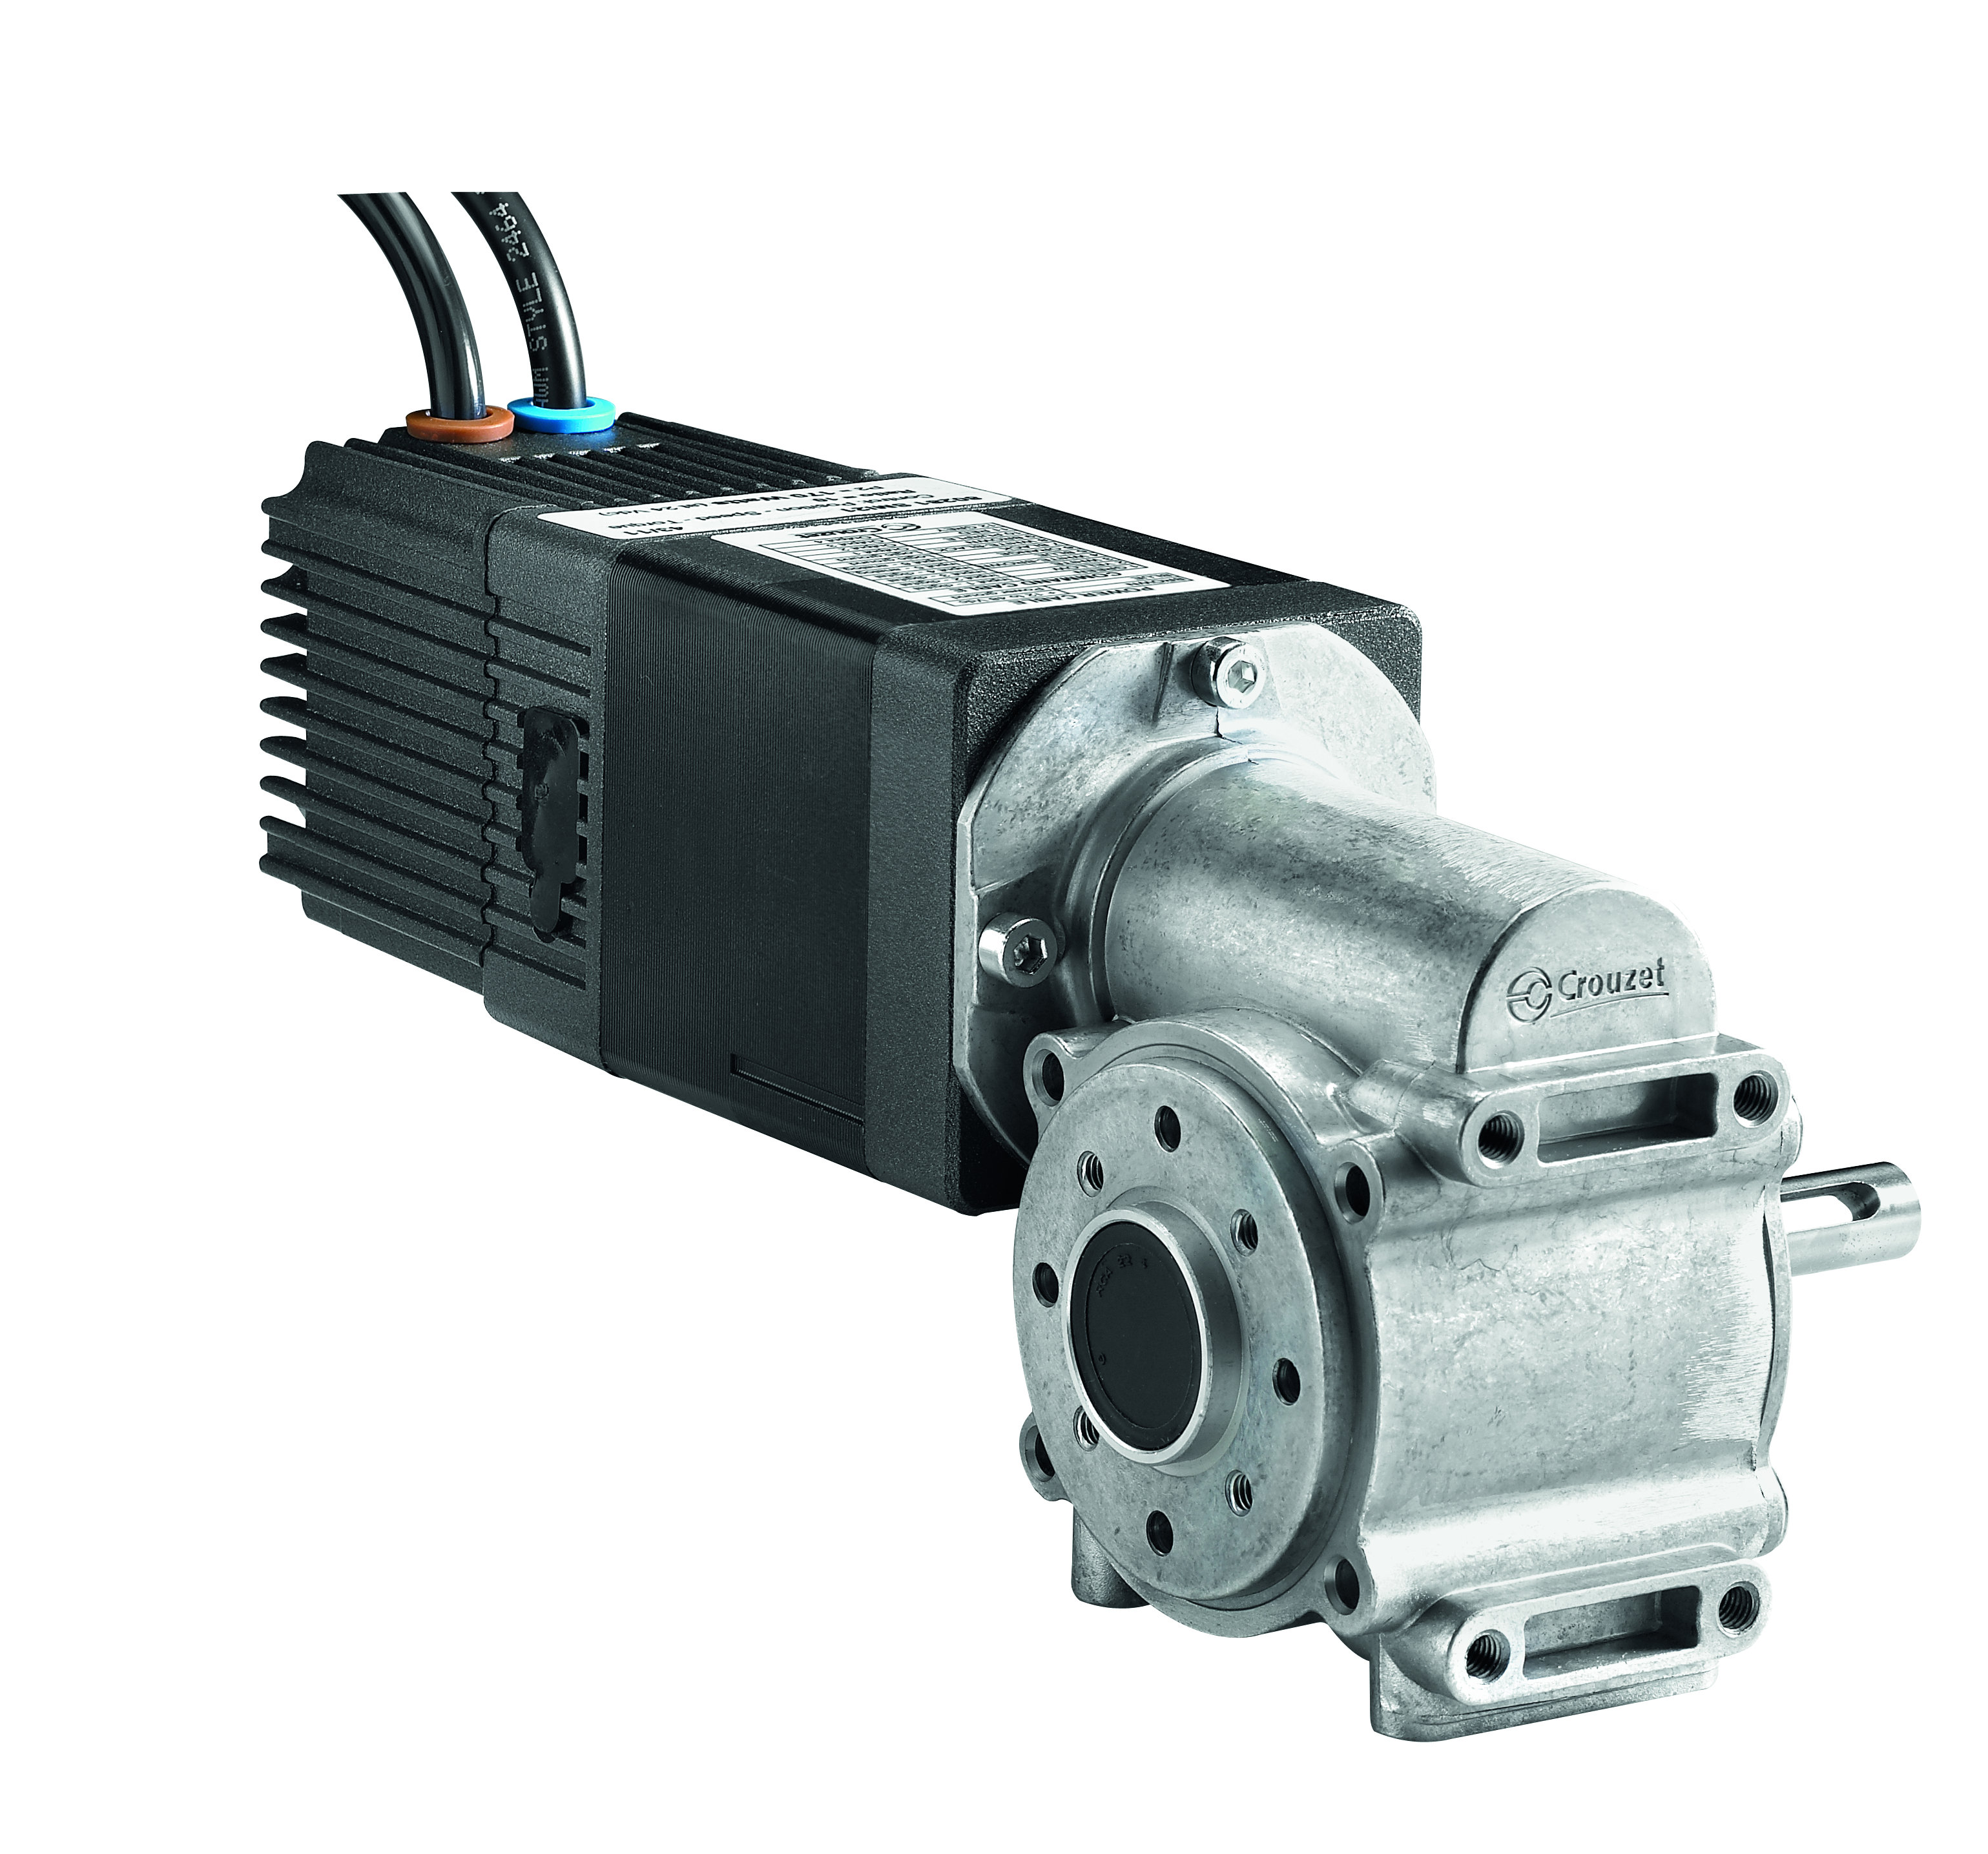 SQ57 Motor 150W 12-32Vdc + Drive TNi21 0-10V + Gearbox RAD10 ratio 30-1